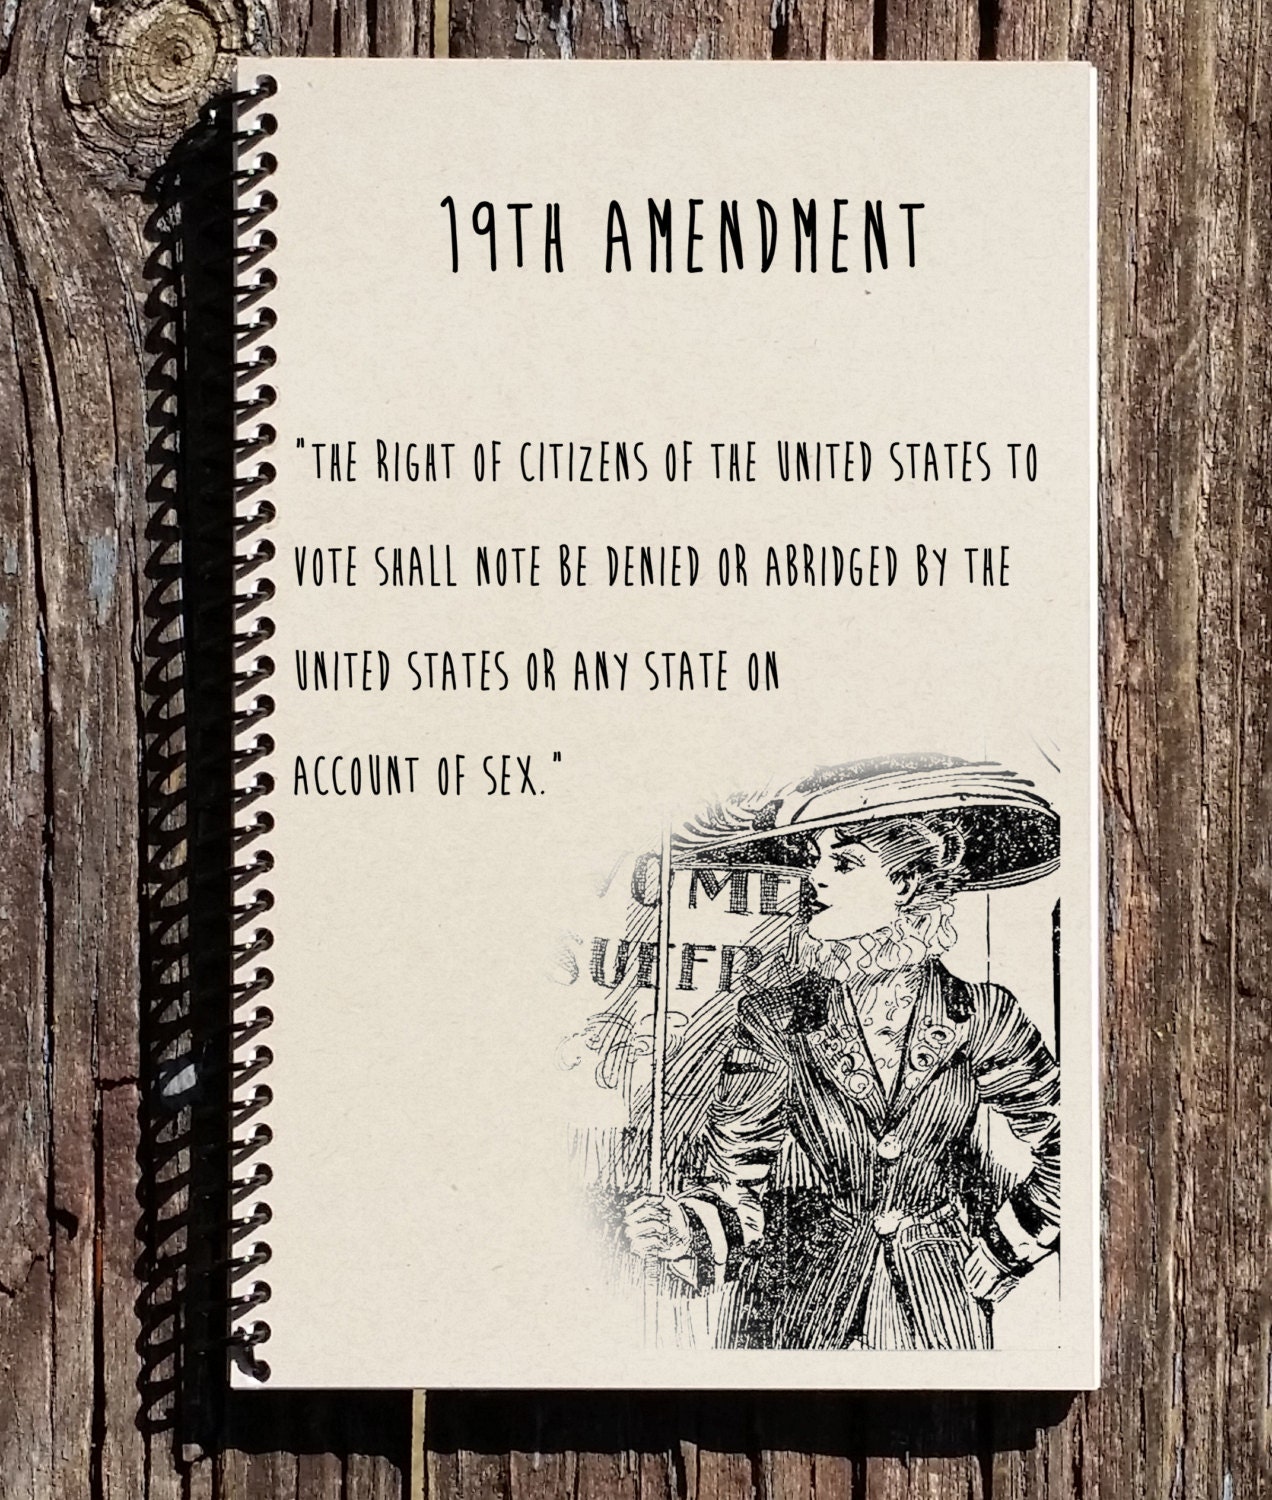 thesis of 19th amendment